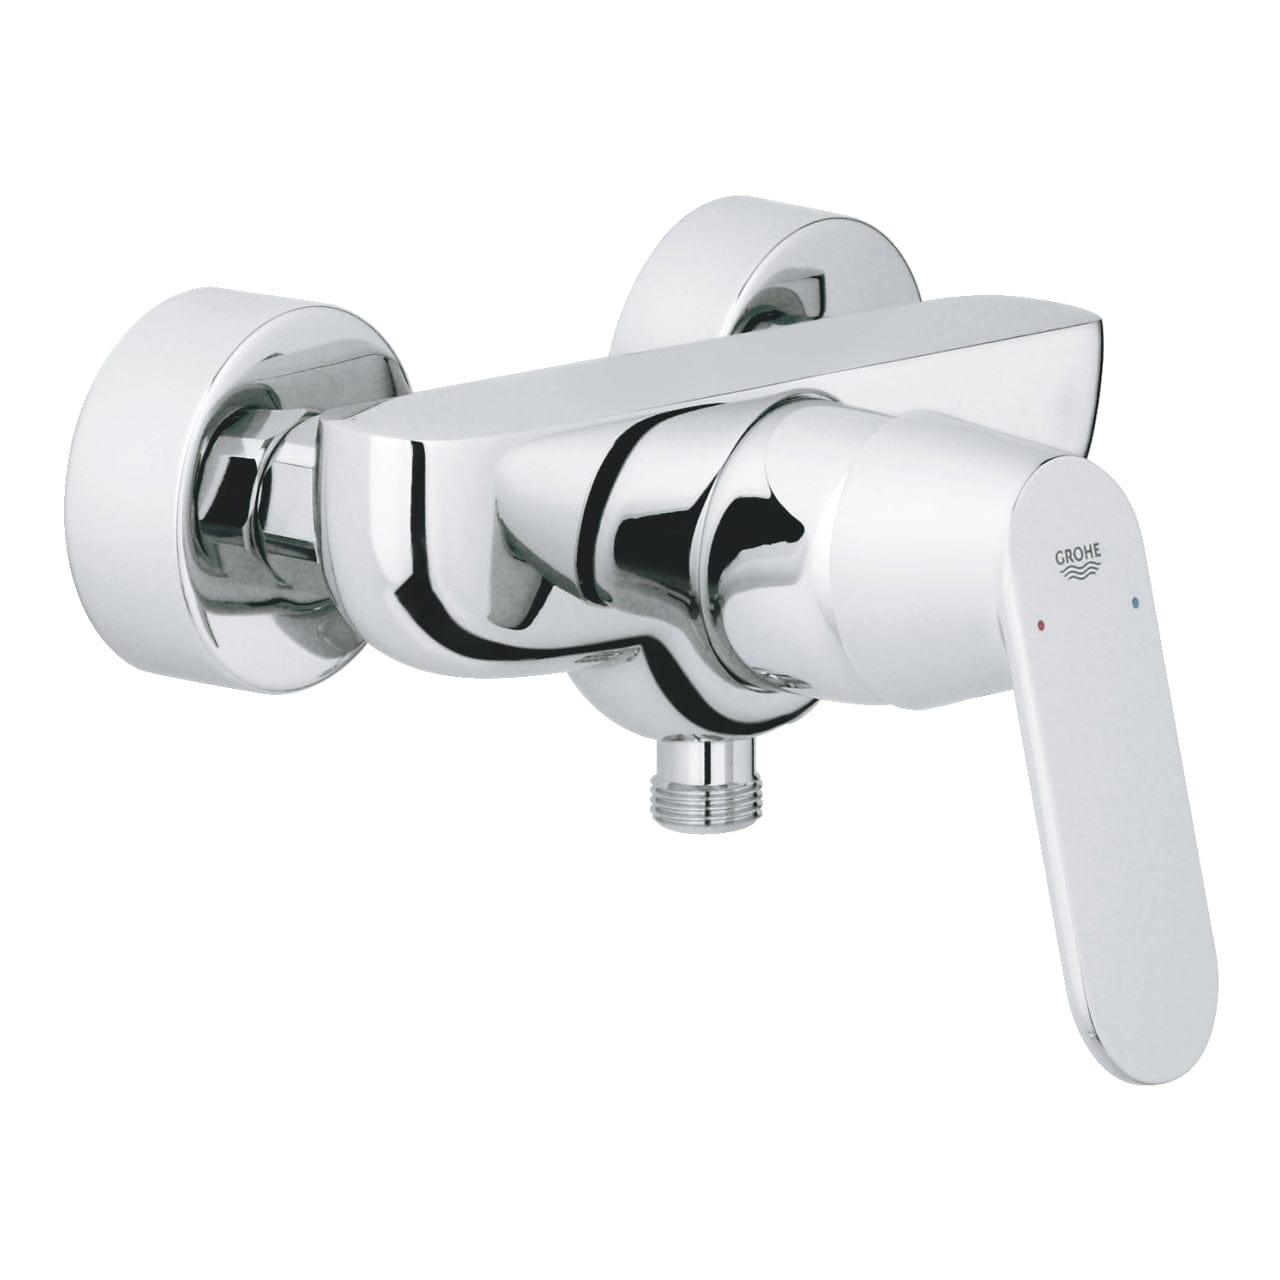 Grohe Eurosmart Cosmopolitan Single-lever shower mixer 1/2″, Chrome | Supply Master | Accra, Ghana Bathroom Faucet Buy Tools hardware Building materials